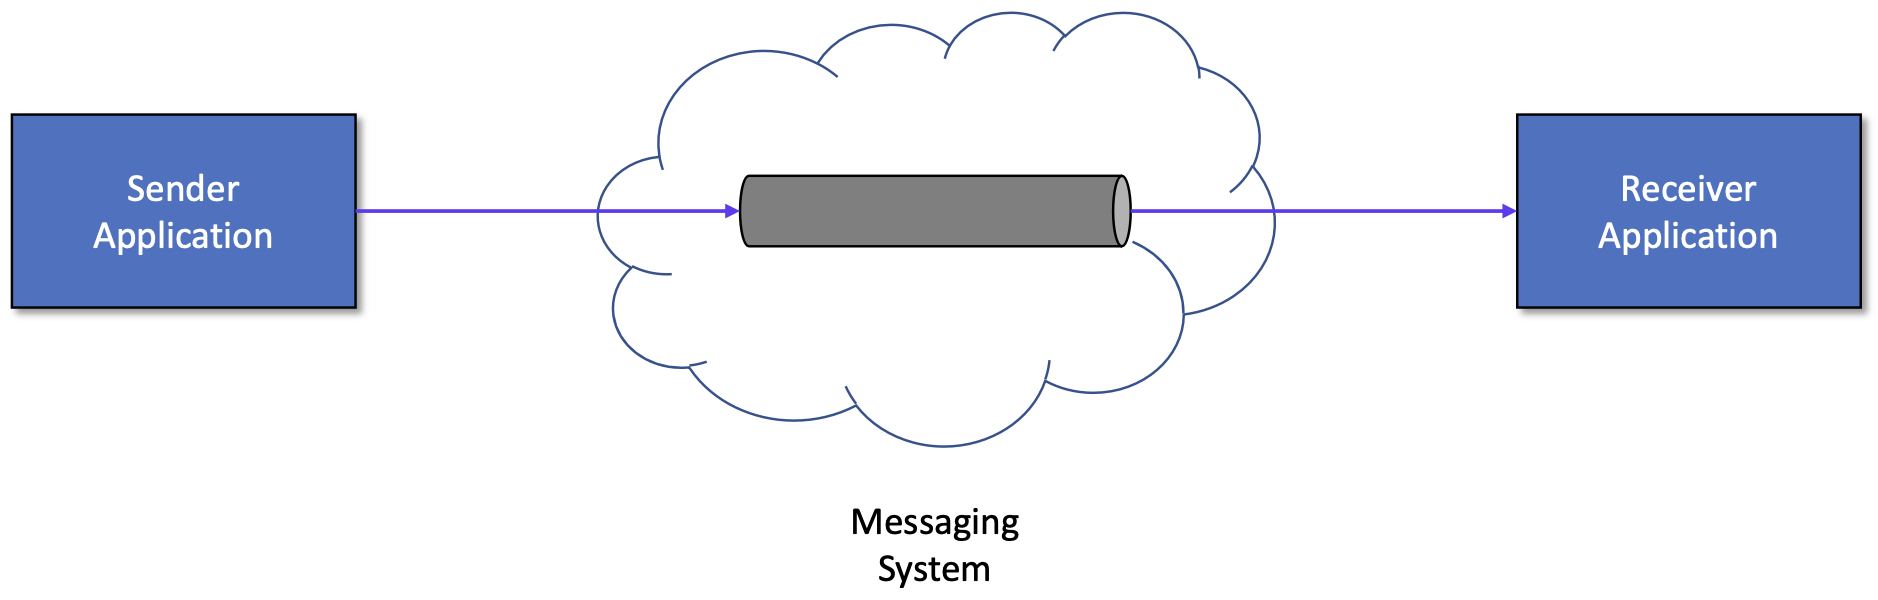 Single Messaging System